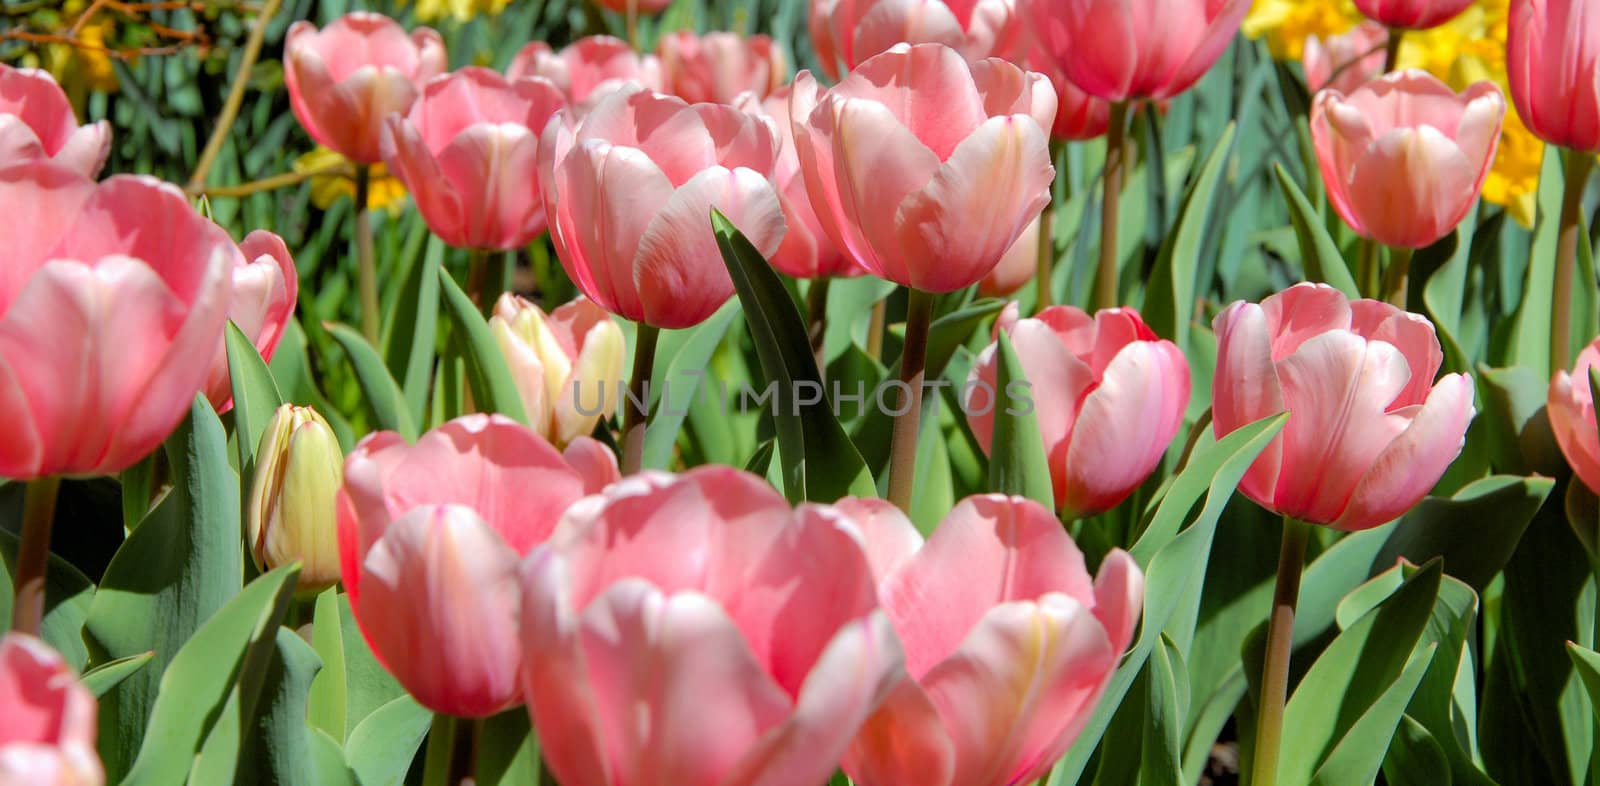 Tulips by northwoodsphoto